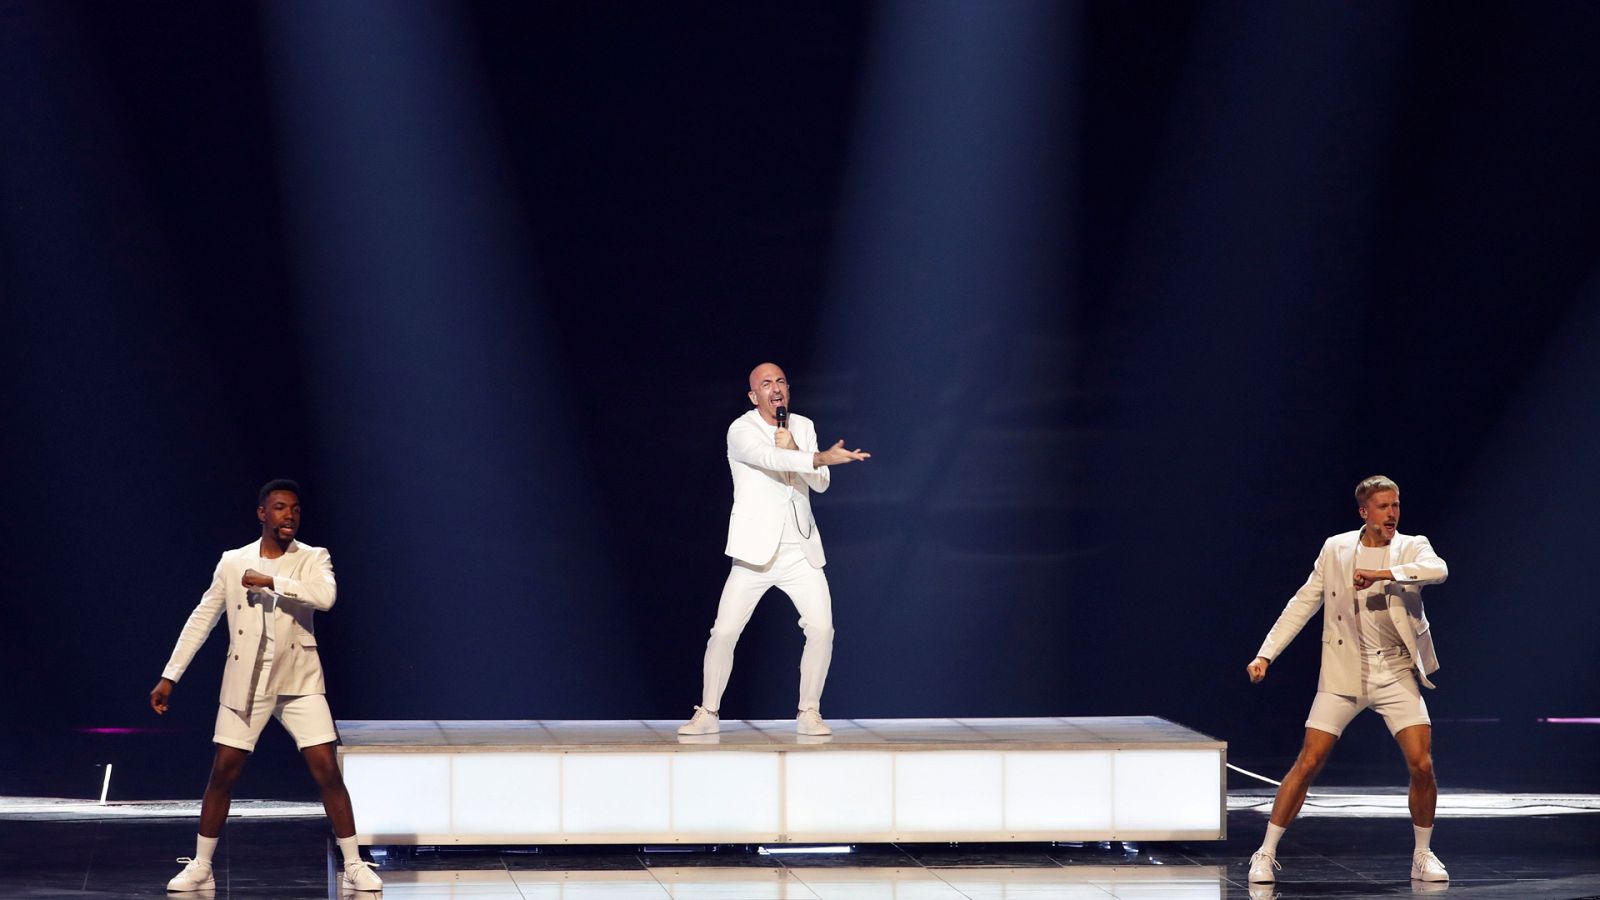 Eurovisión 2019 - San Marino: Serhat canta "Say na na na" en la final